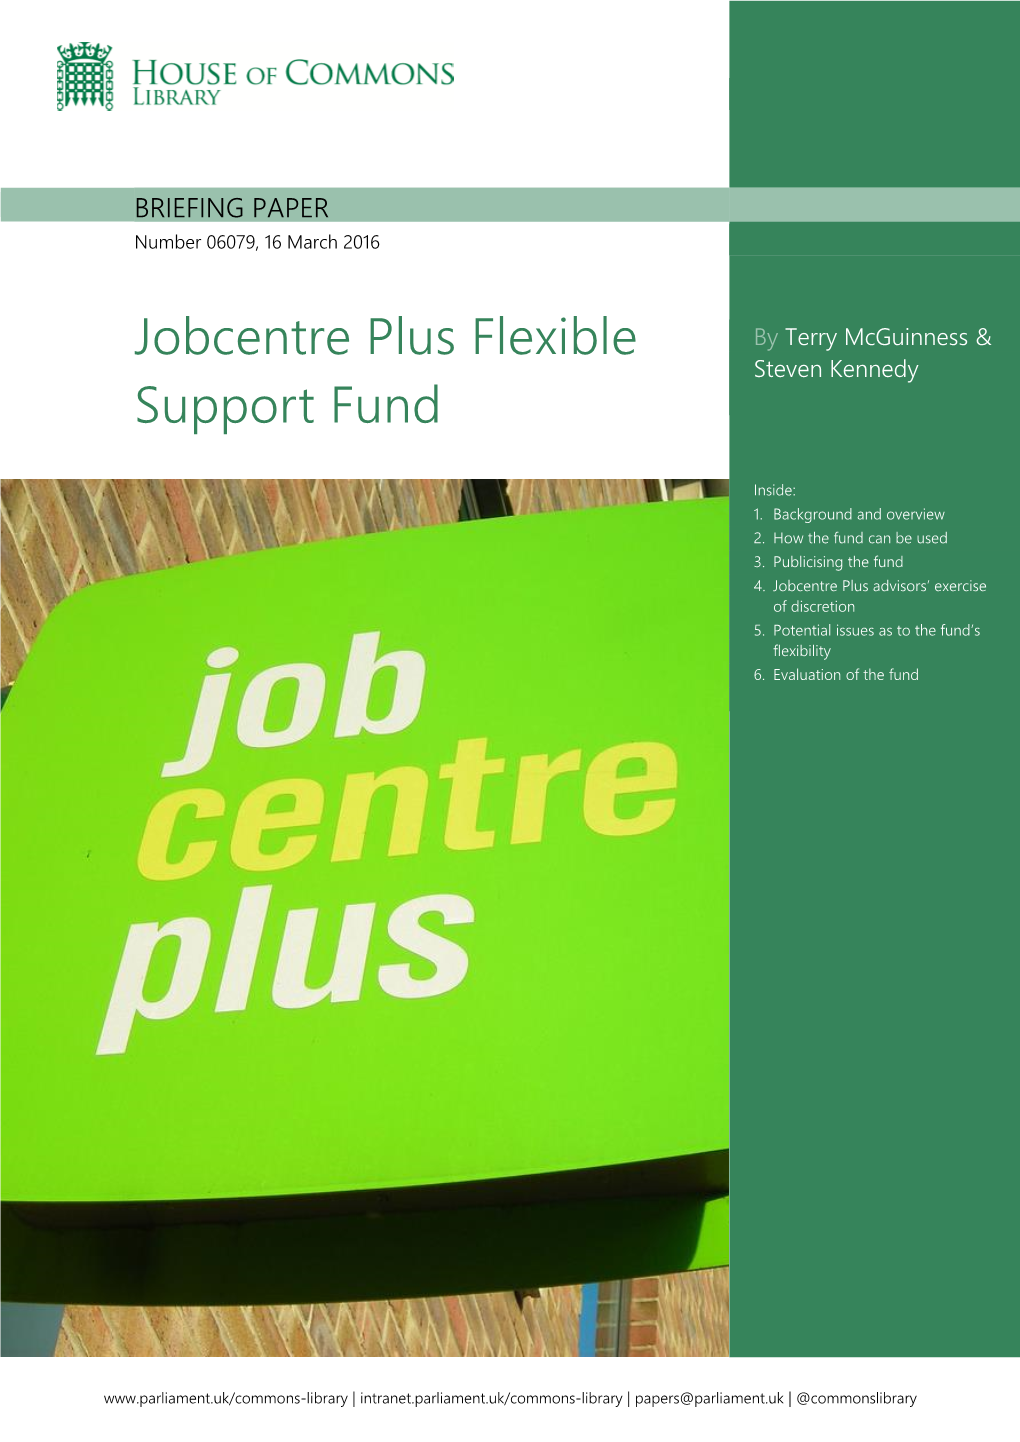 Jobcentre Plus Flexible Support Fund